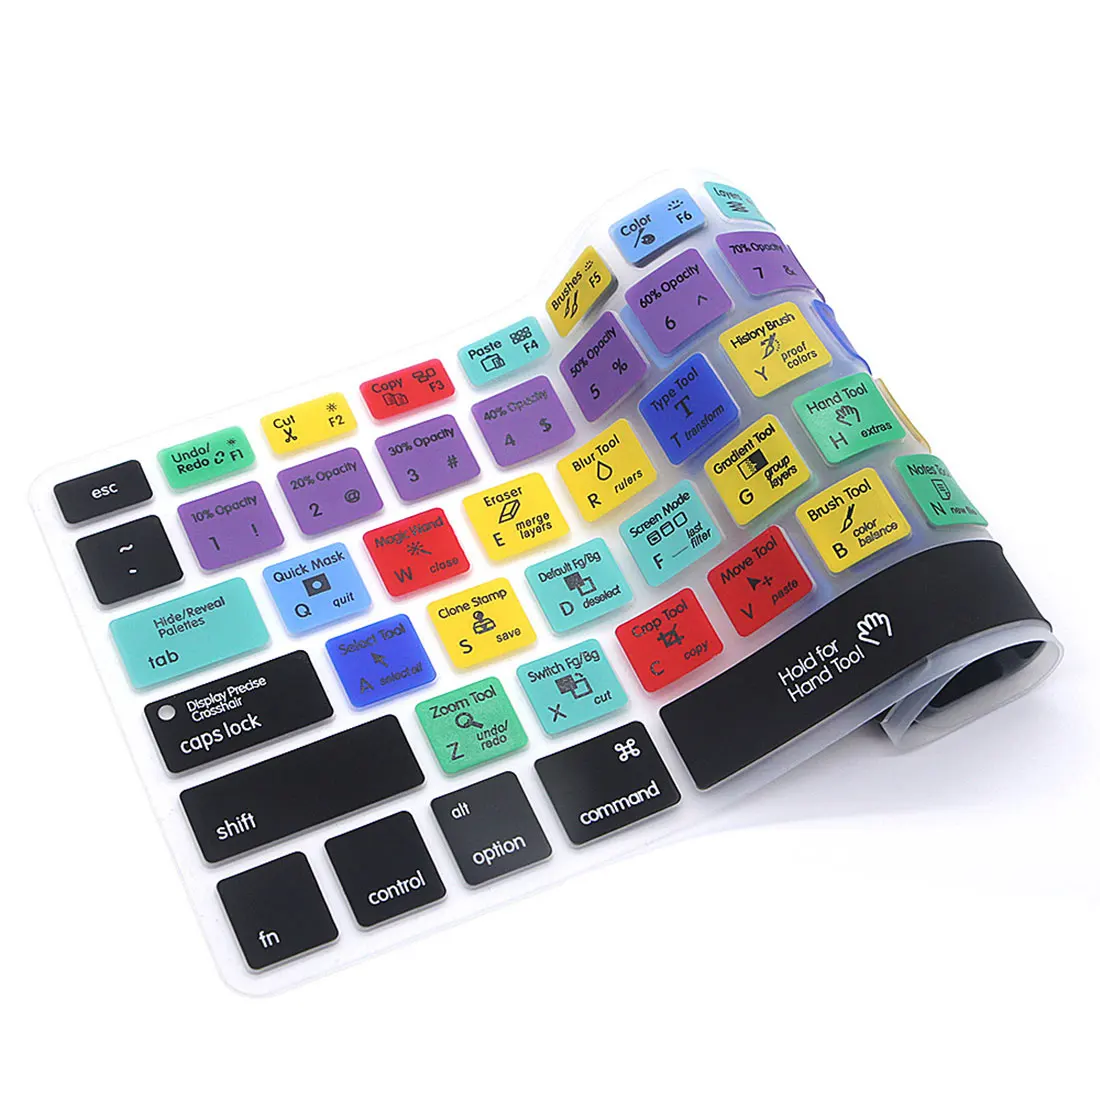 Centechia США/ЕС английский силикон фотошоп ярлыки клавиатуры протектор Чехлы для клавиатуры для Macbook Pro Air 13 15 17